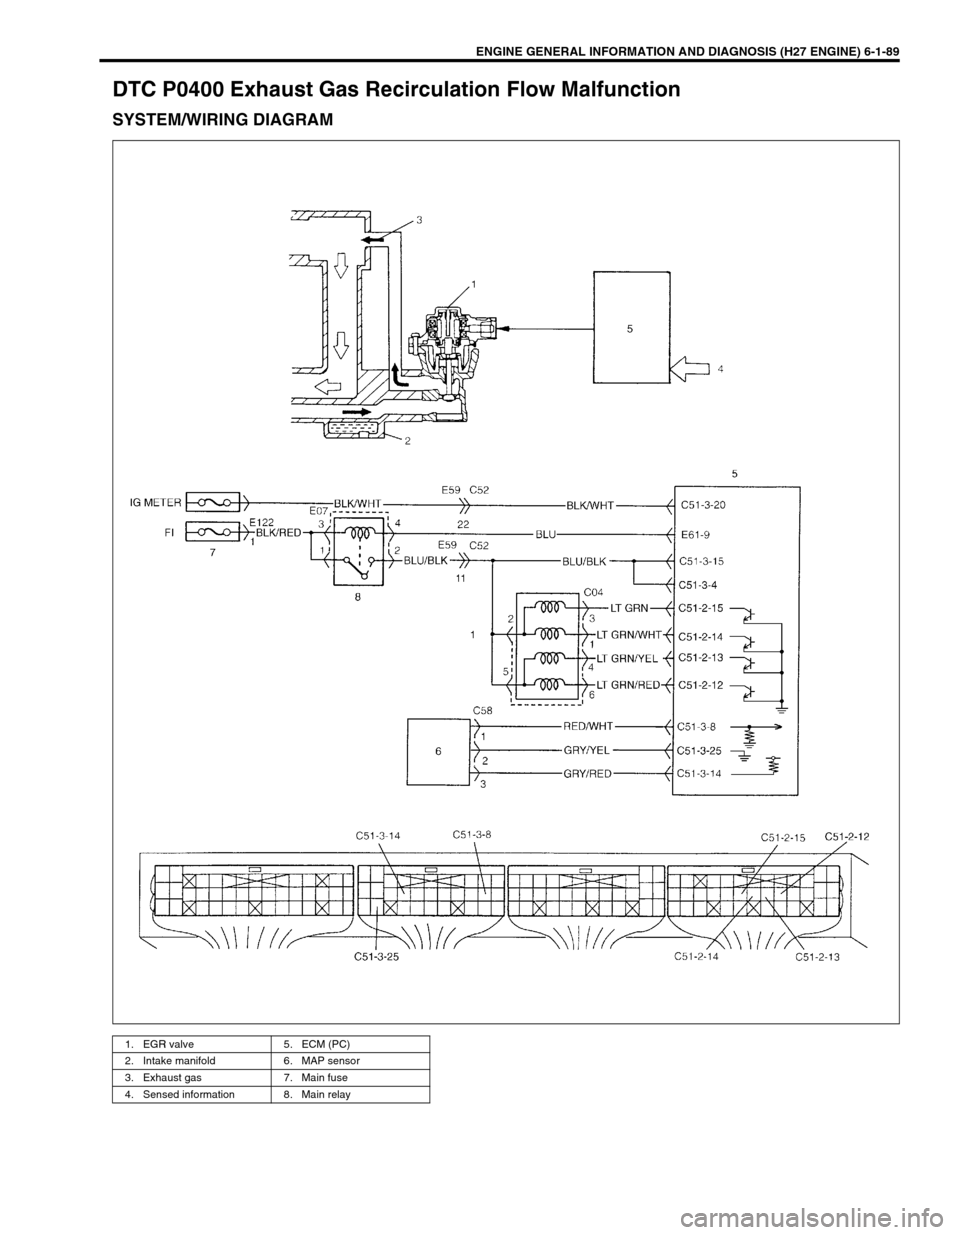 SUZUKI GRAND VITARA 2001 2.G Owners Manual ENGINE GENERAL INFORMATION AND DIAGNOSIS (H27 ENGINE) 6-1-89
DTC P0400 Exhaust Gas Recirculation Flow Malfunction
SYSTEM/WIRING DIAGRAM
1. EGR valve 5. ECM (PC)
2. Intake manifold 6. MAP sensor
3. Exh